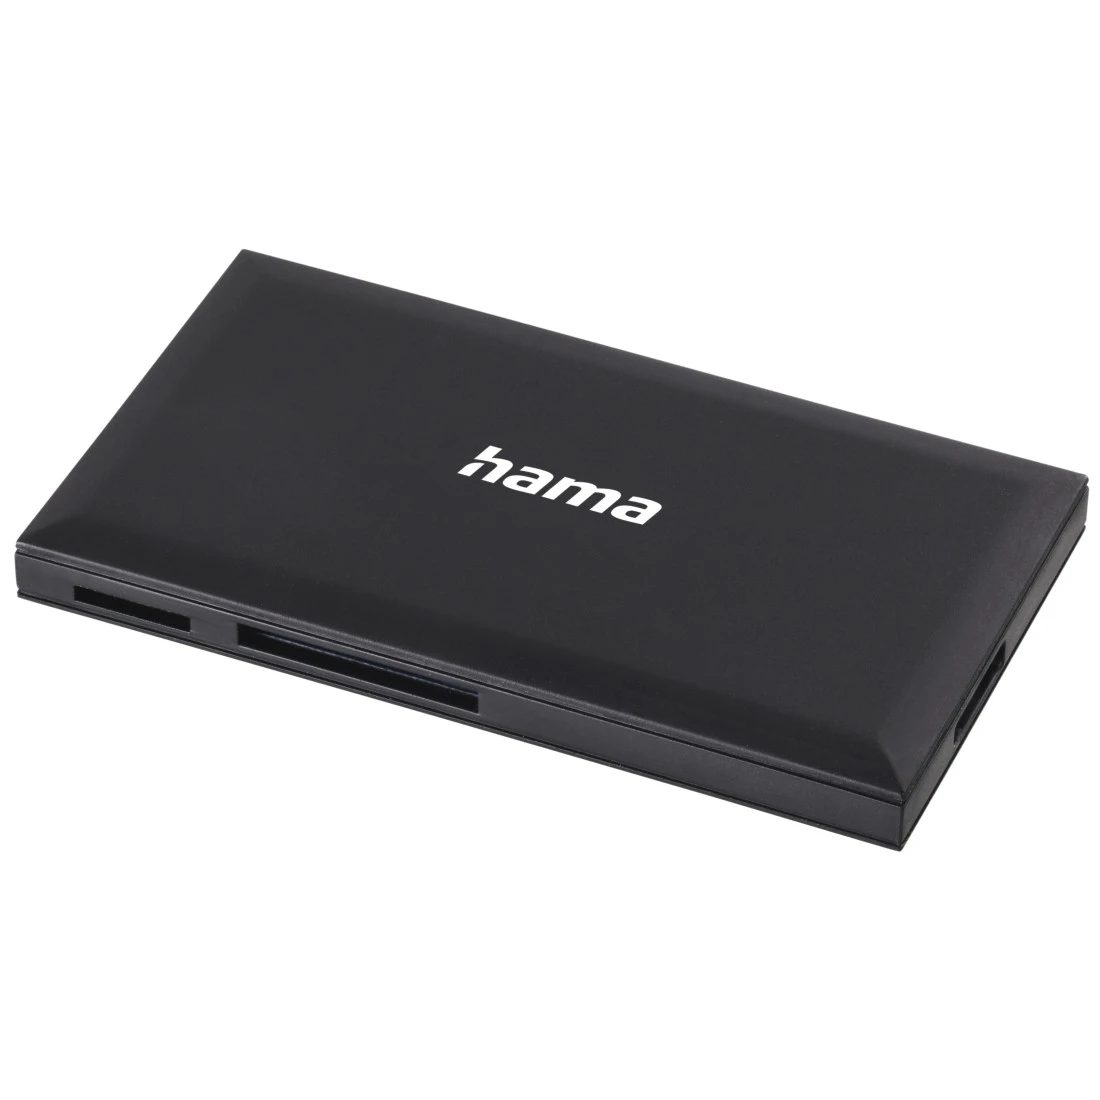 Lecteur multi-cartes USB-3.0, SD / microSD / CF, noir